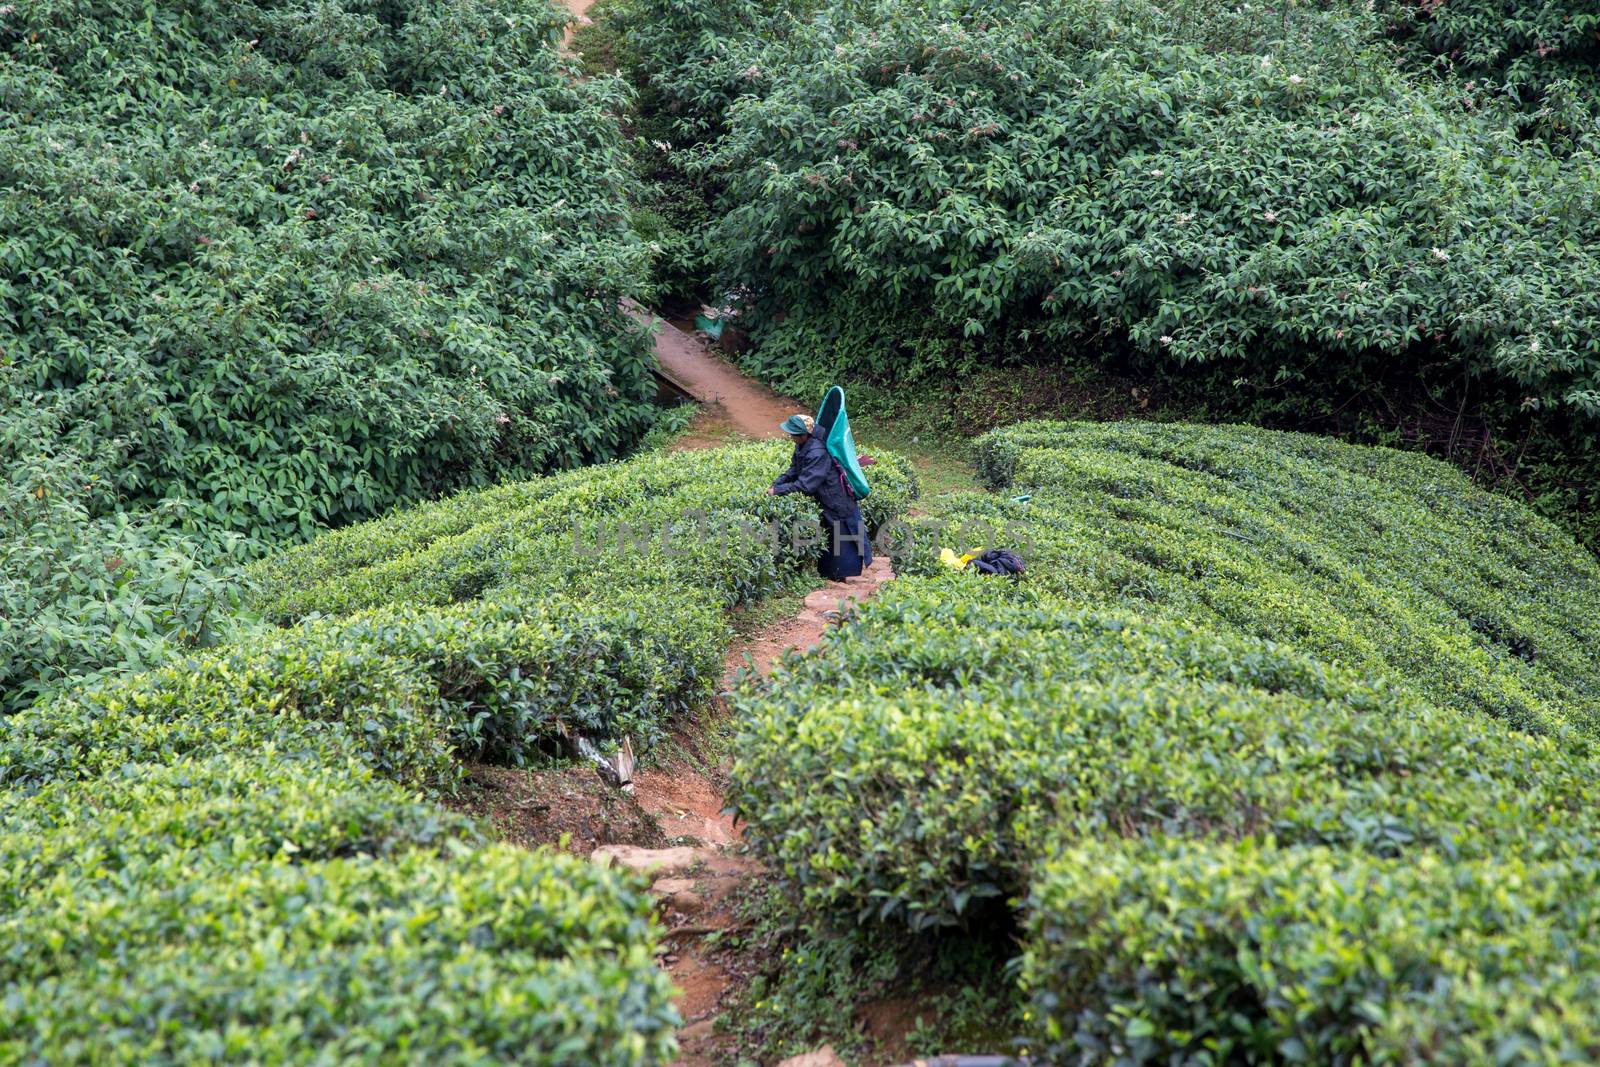 Nuwara Eliya, Sri Lanka - August 7, 2018: A tea plantation worker picking tea leafs